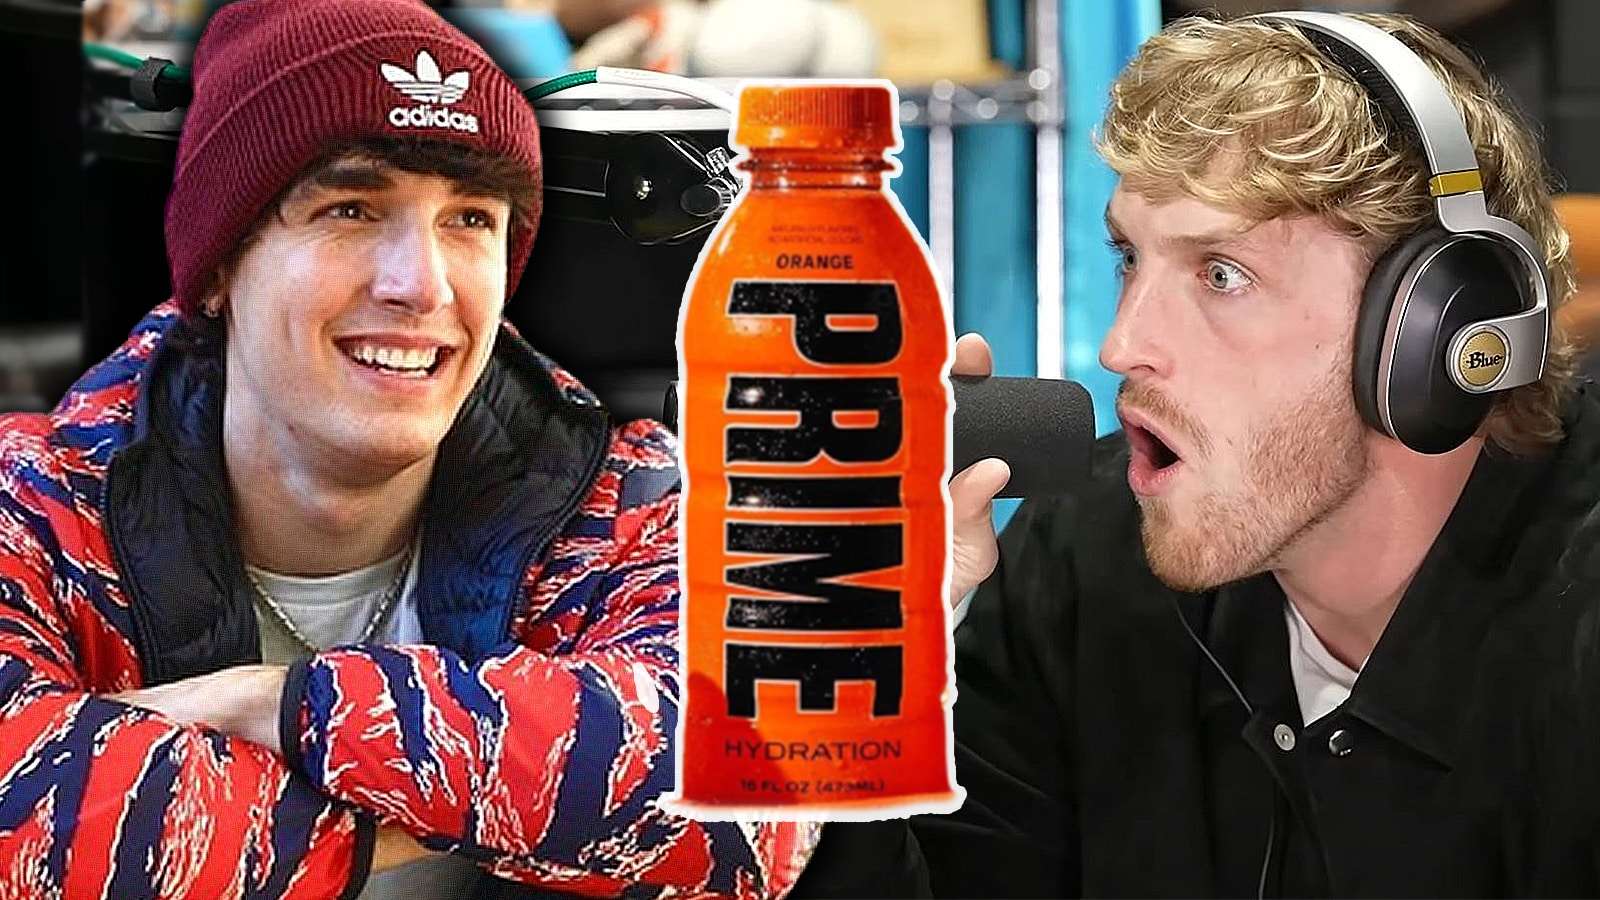 Brye Hall trolls Logan Paul over Prime Hydration drink